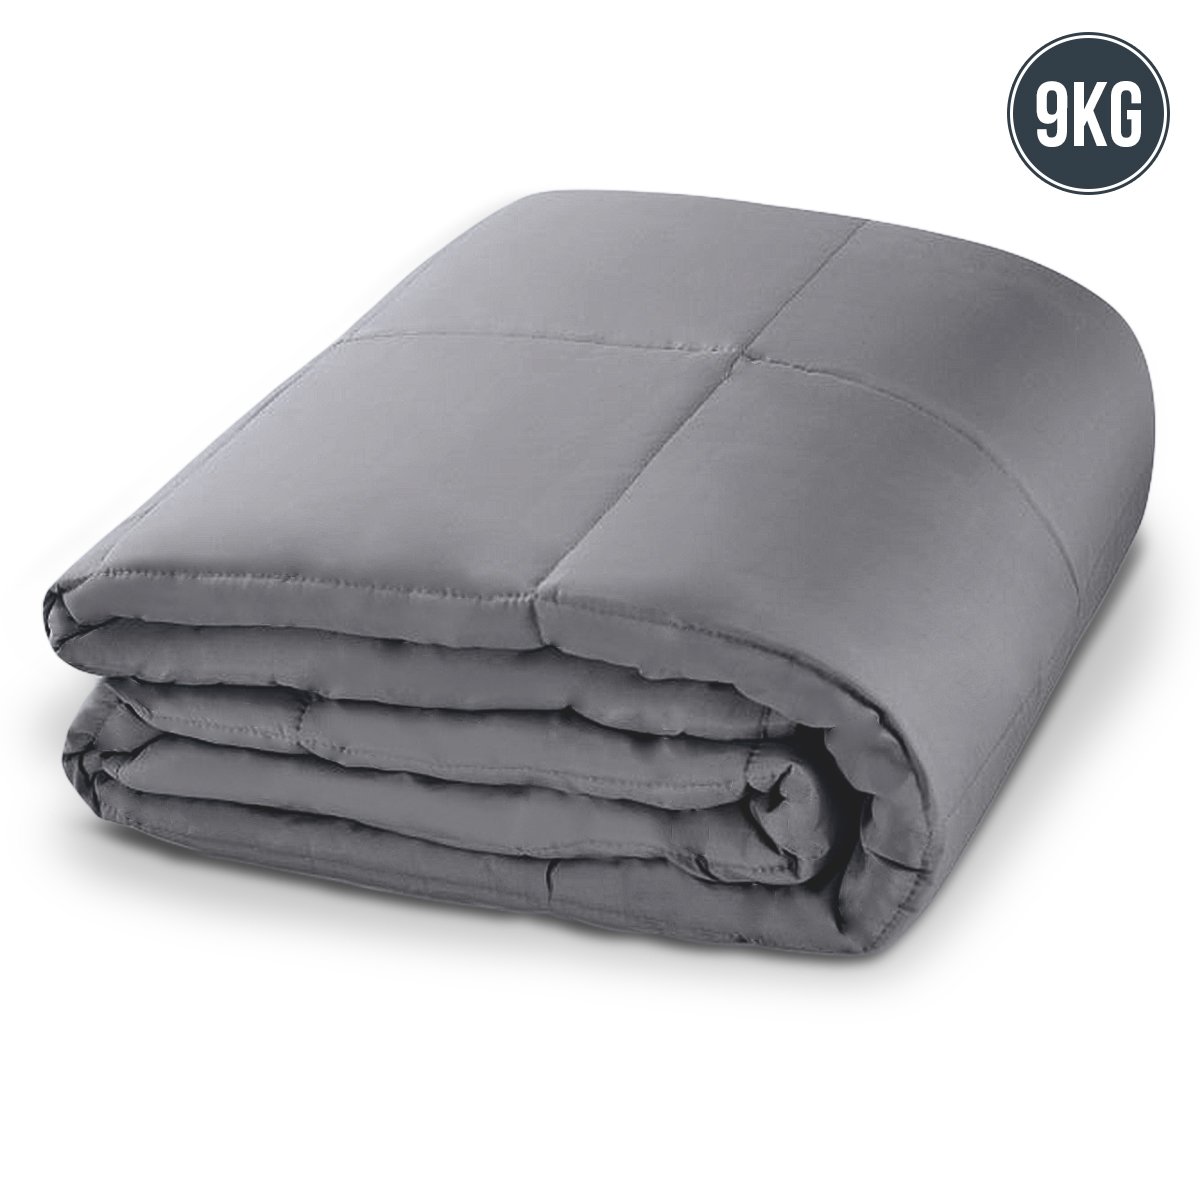 Laura Hill Weighted Blanket Heavy Quilt Doona 9Kg - Grey 1